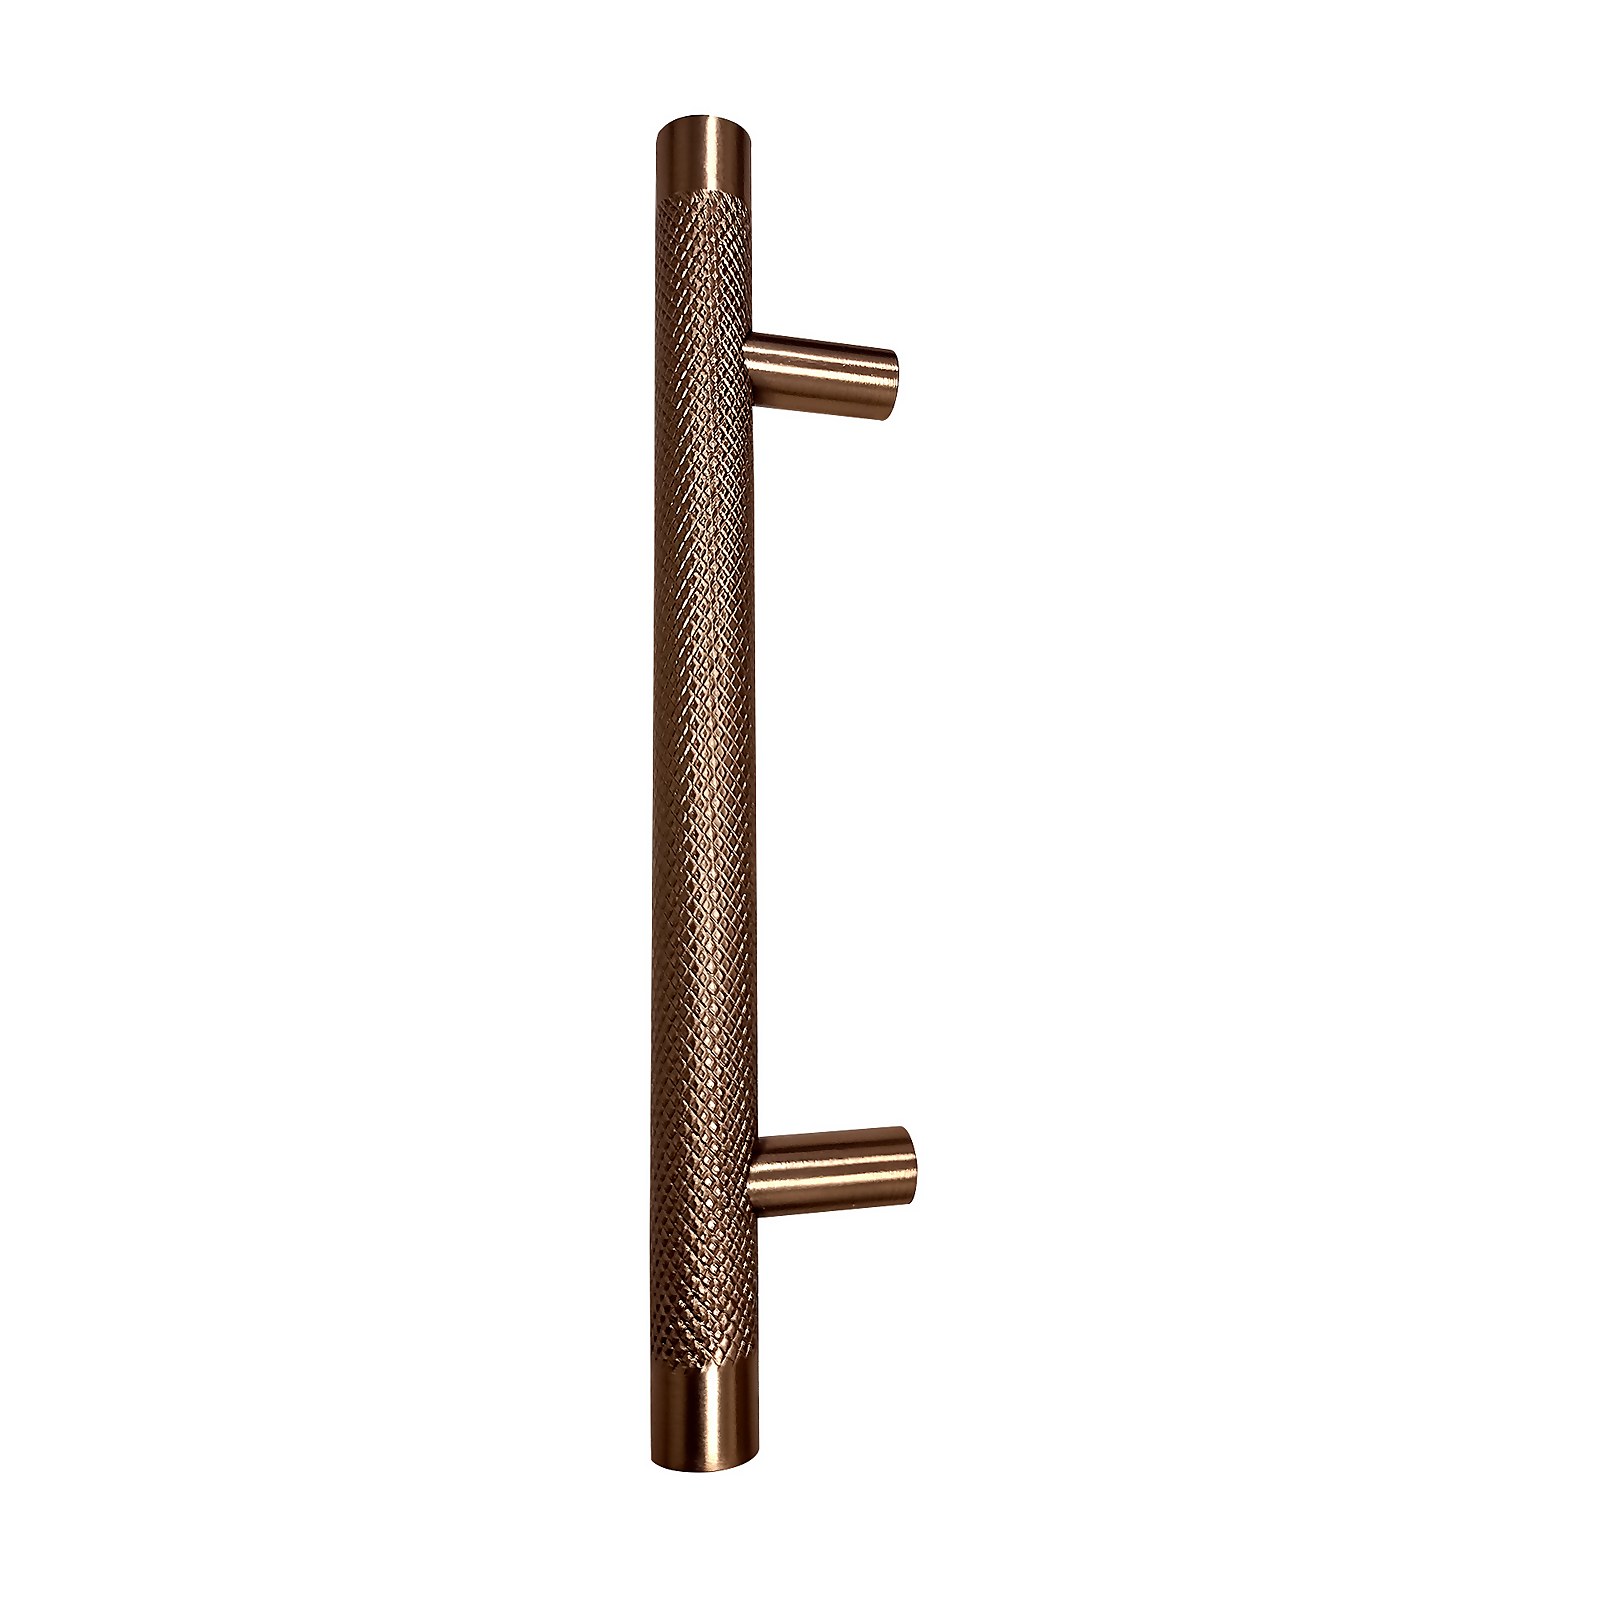 Photo of Savona Steel Copper T-bar Handle - 2 Pack